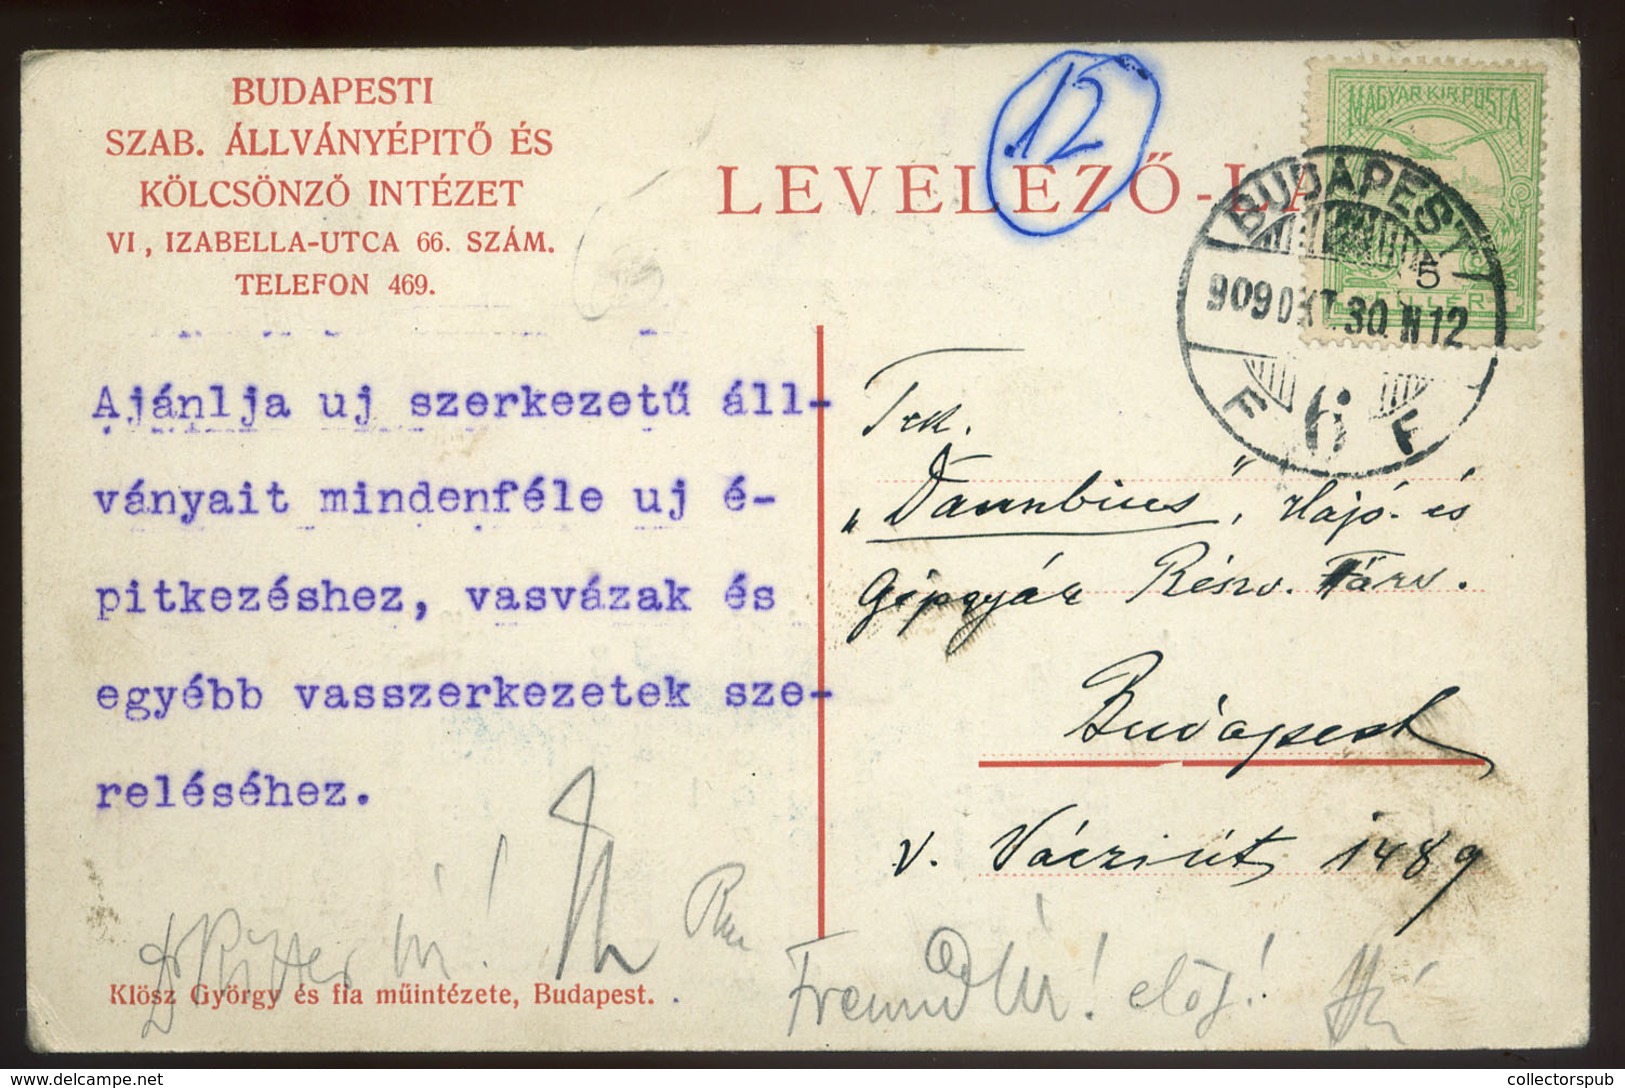 BUDAPEST 1909. Kettőslétra állvány, Ritka Reklám Képeslap  /  Double Ladder Scaffold Rare Adv. Vintage Pic. P.card - Hongarije